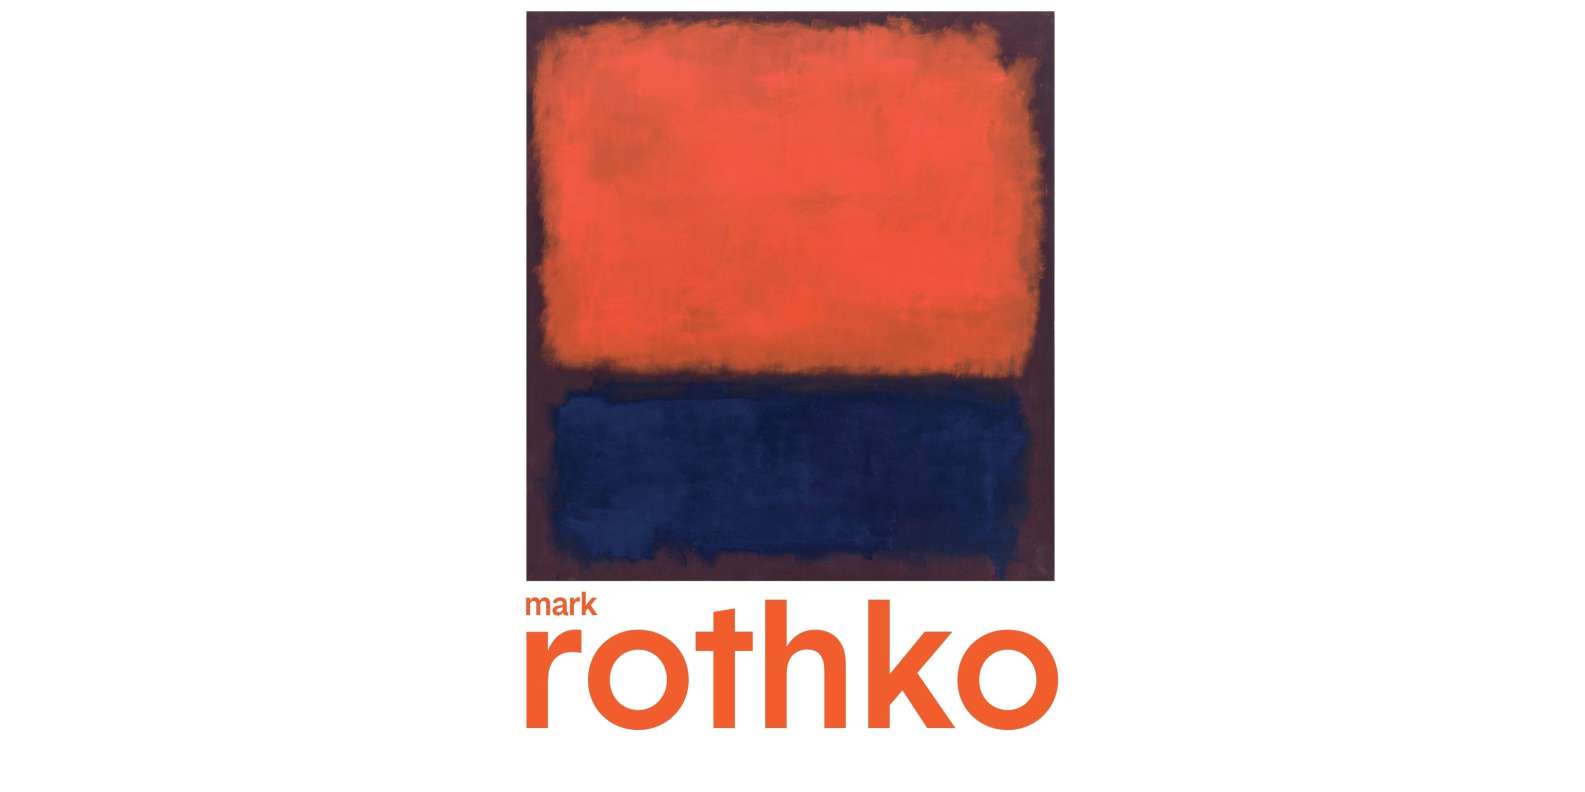 Paris: Mark Rothko Fondation Louis Vuitton Ticket